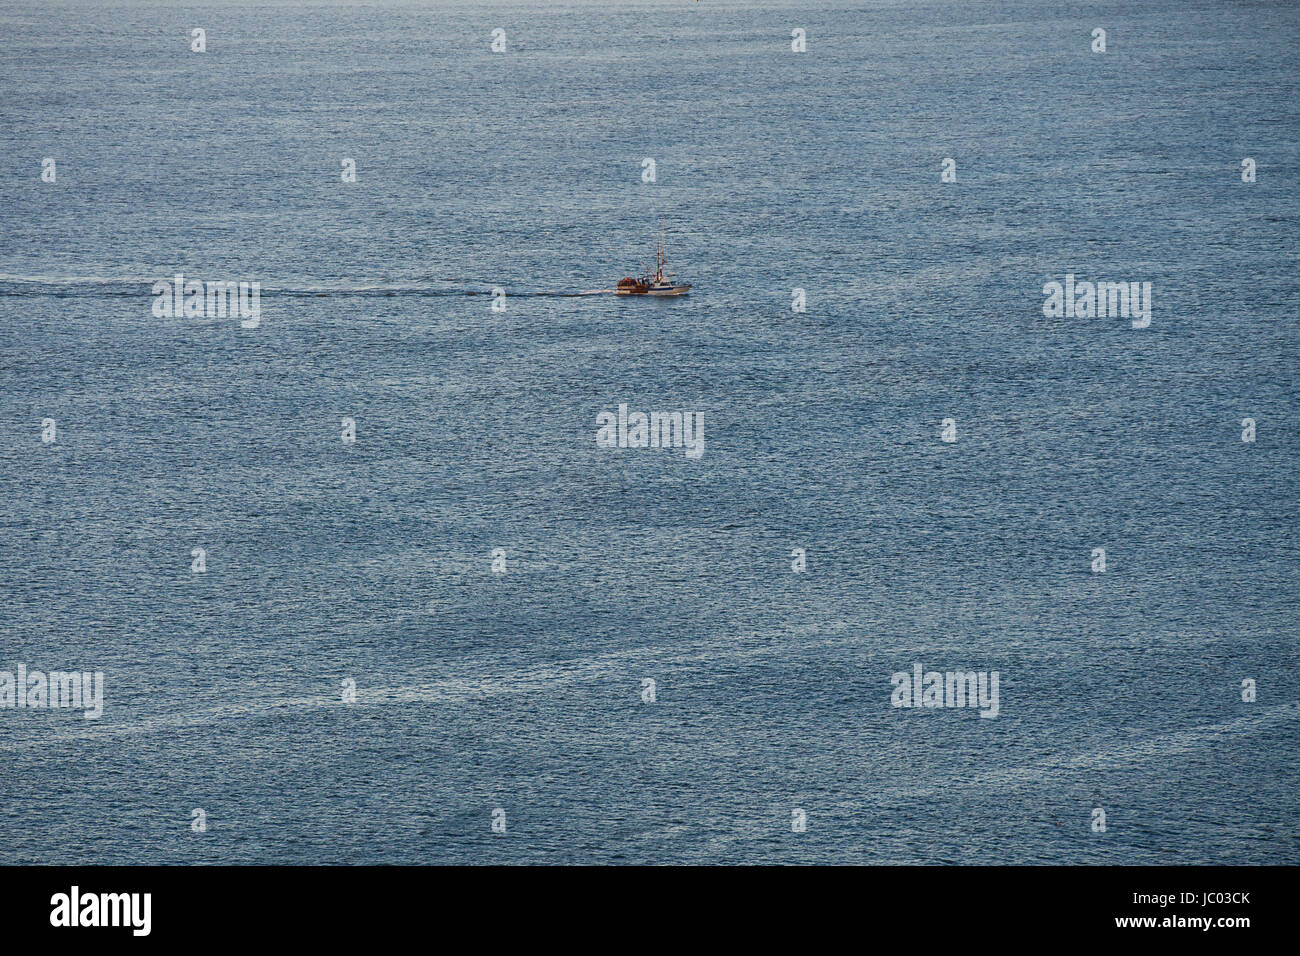 Crab fishing boat on open water (ocean water) - San Francisco, California USA Stock Photo